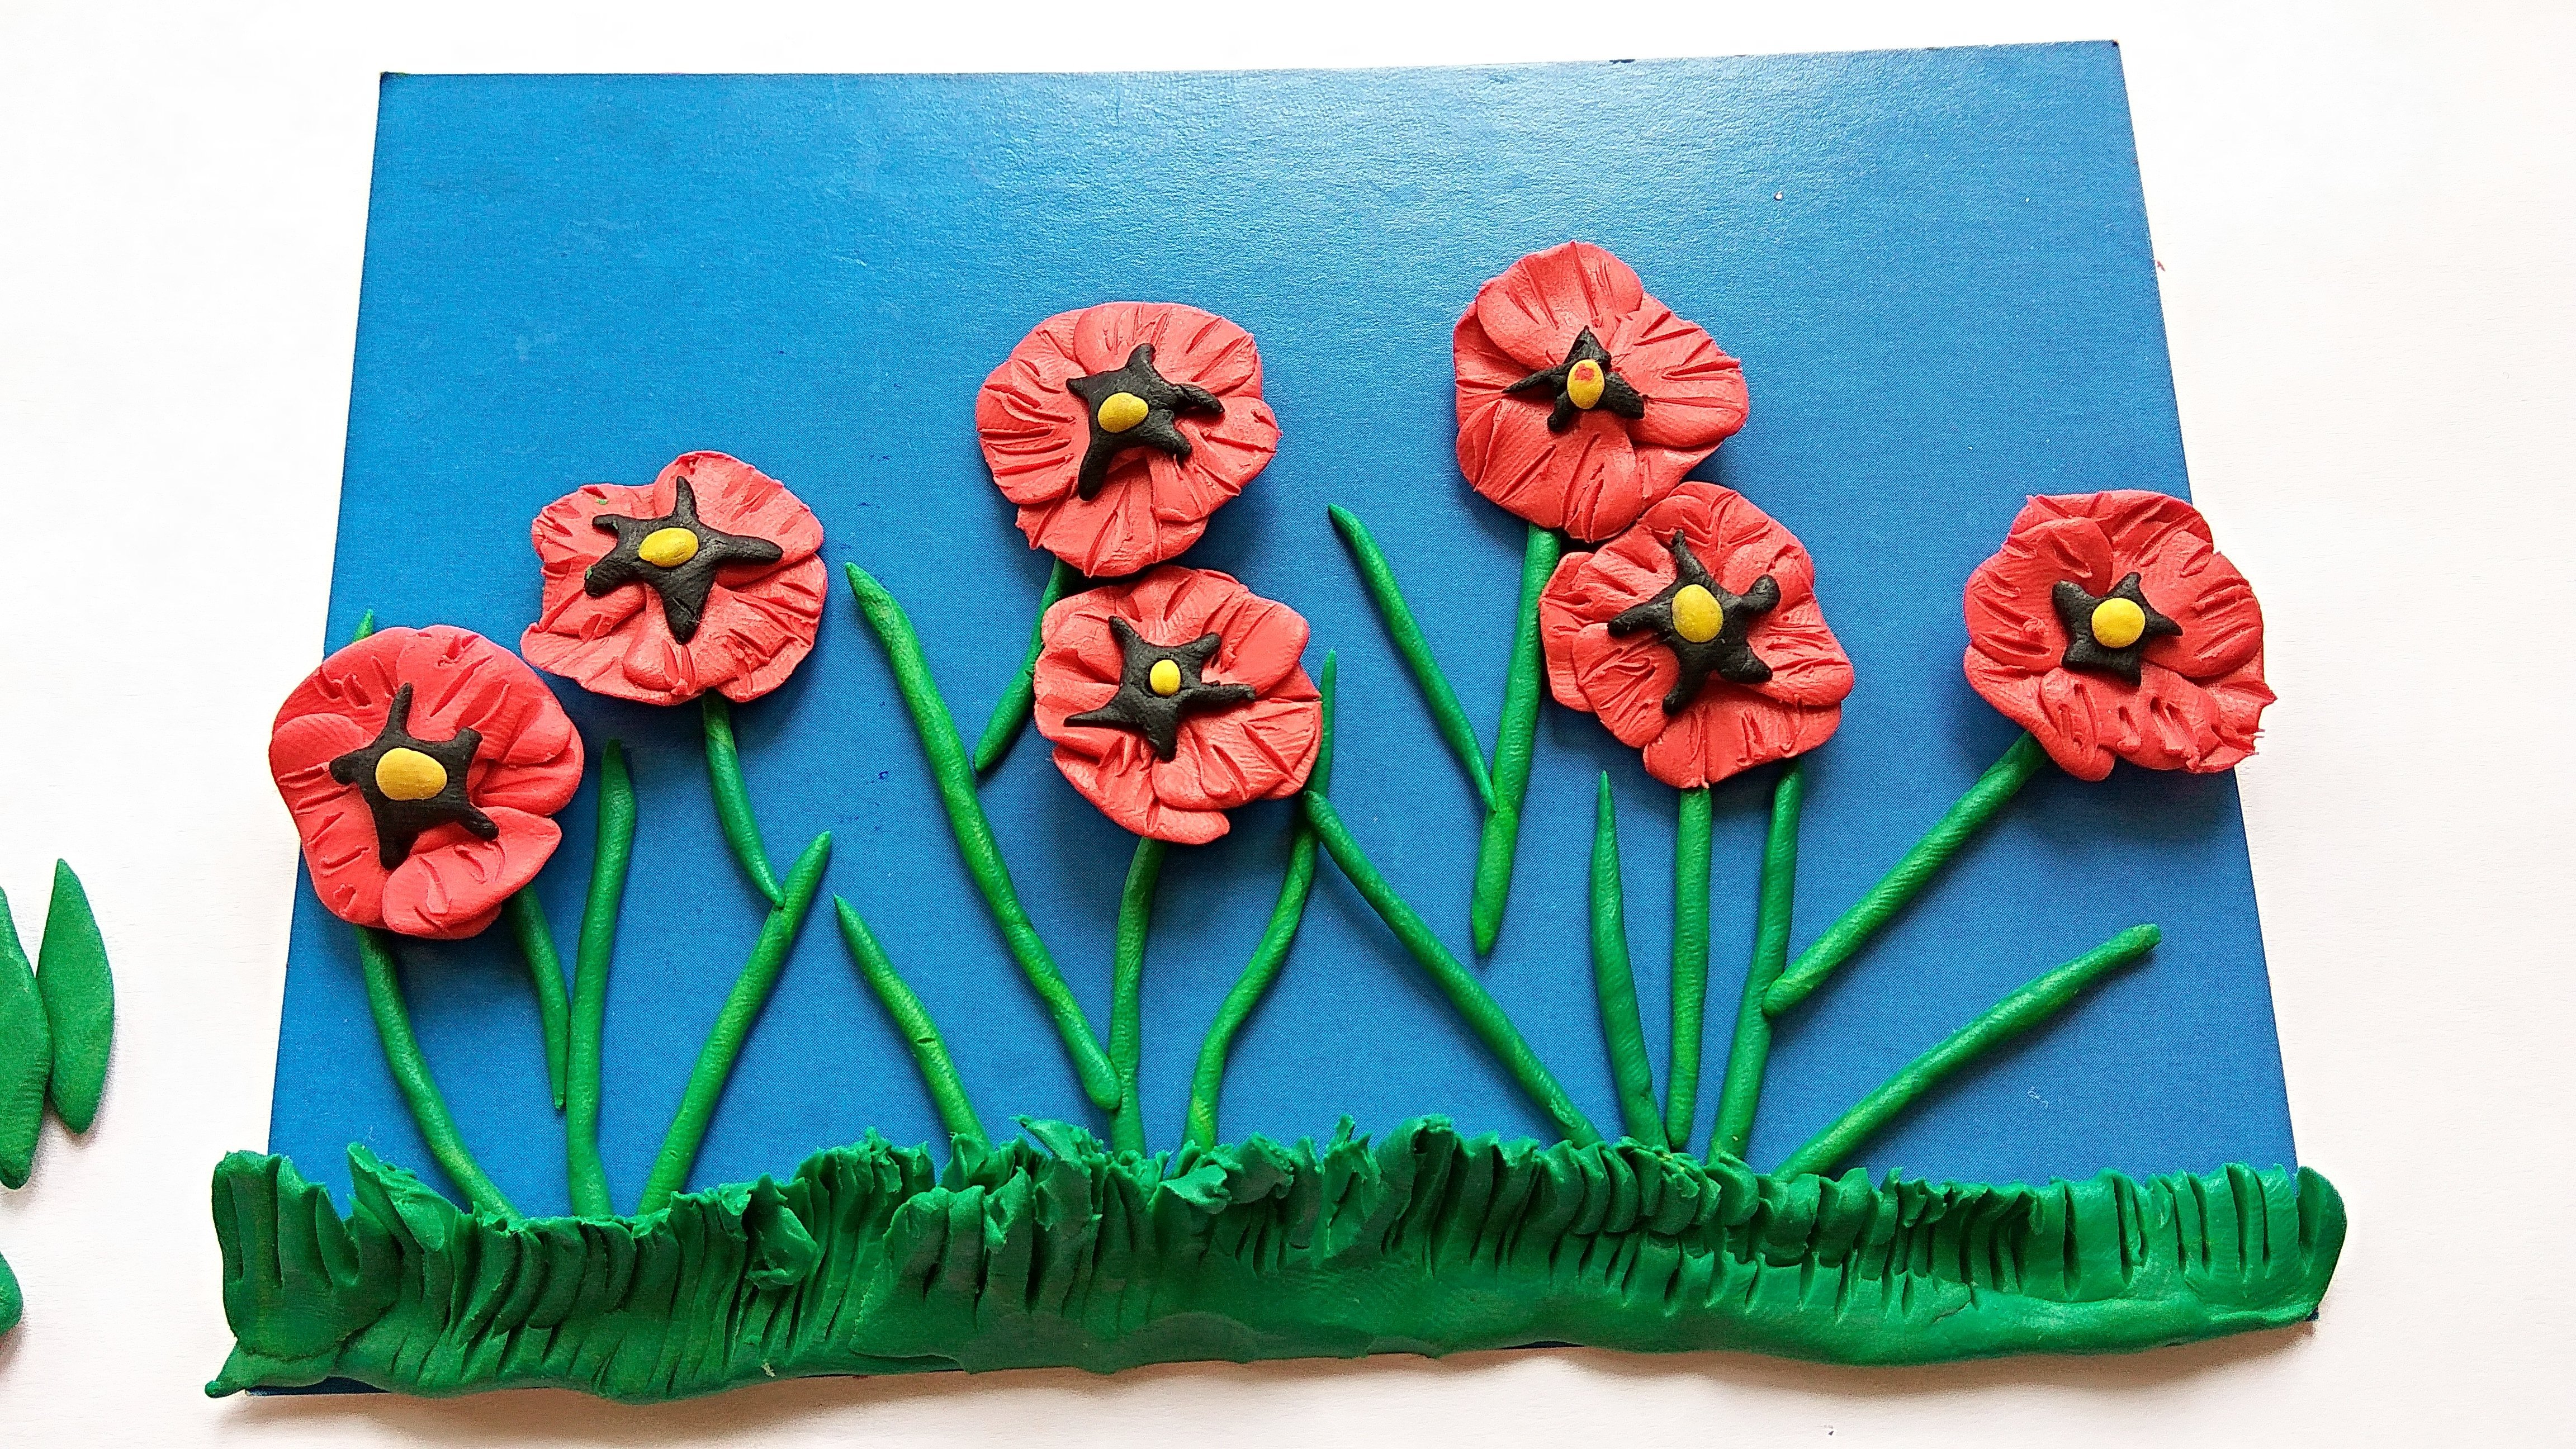 Поделки цветок из пластилина на картоне идеи по изготовлению своими руками фото